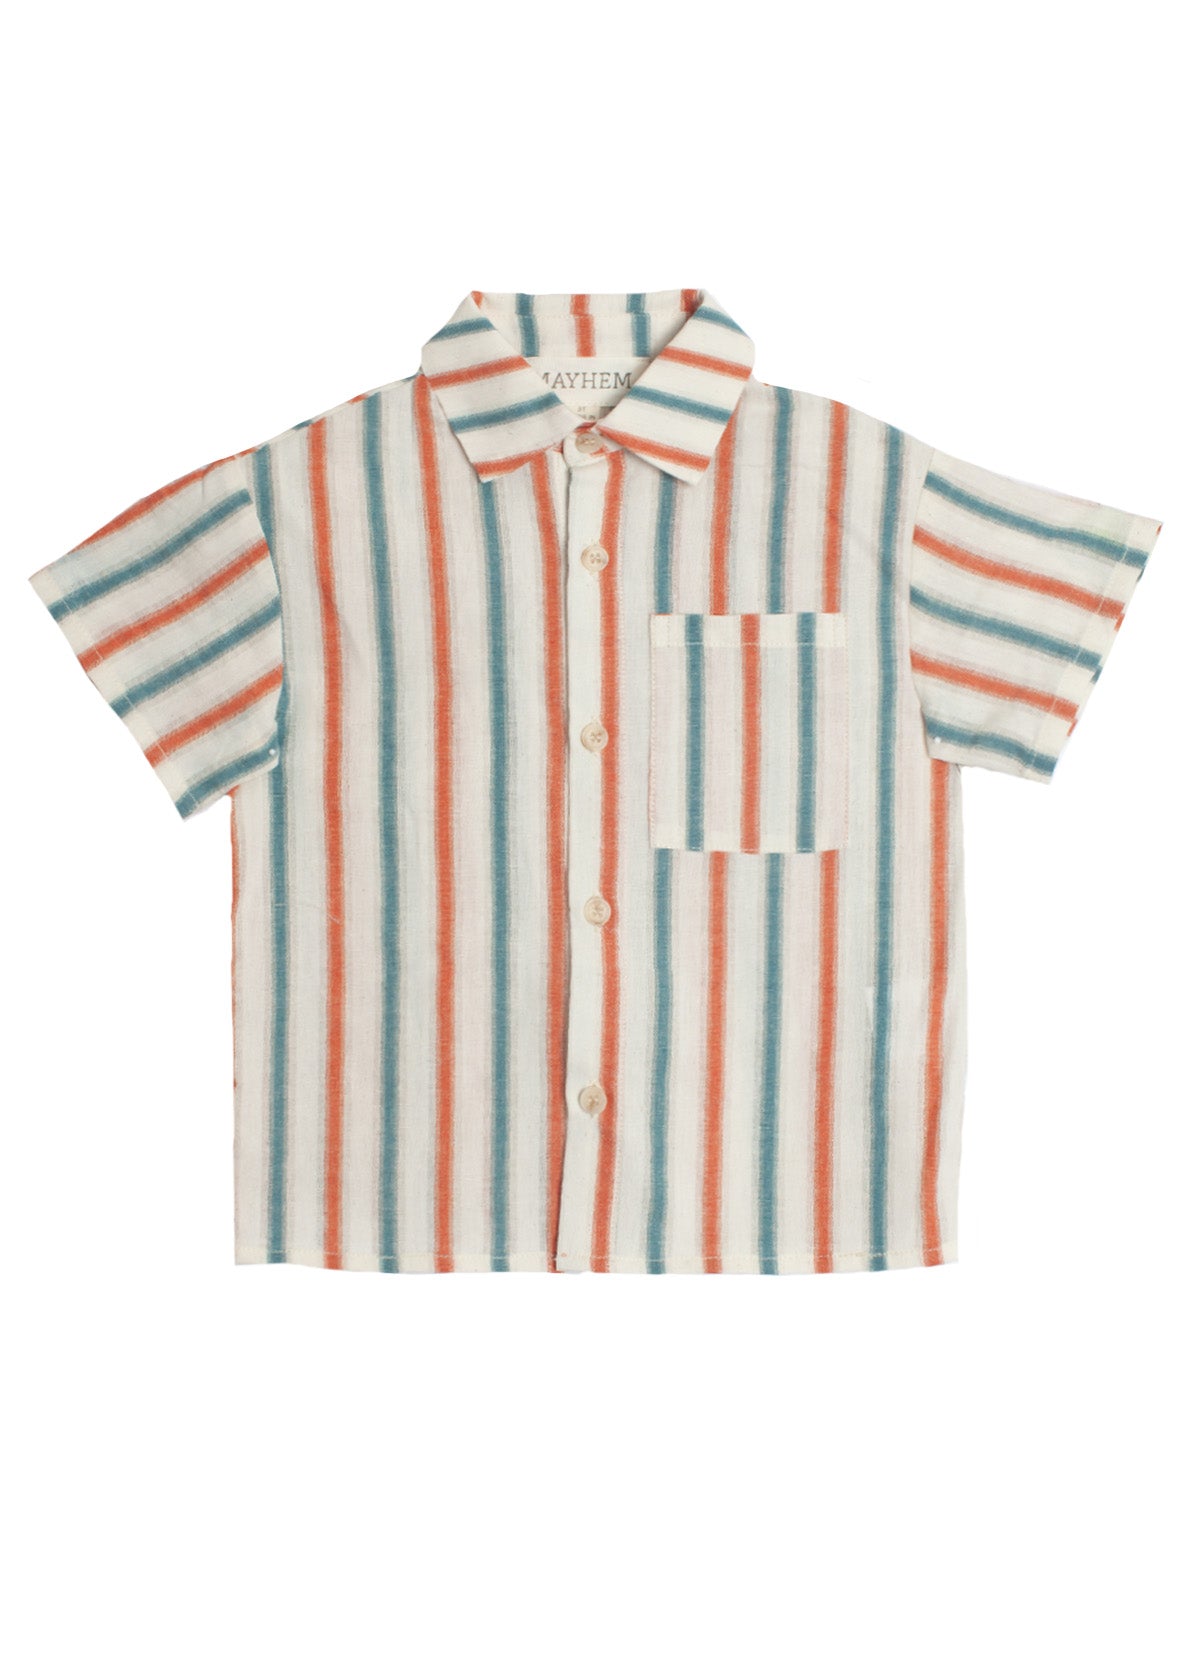 Retro Stripes Collared Shirt